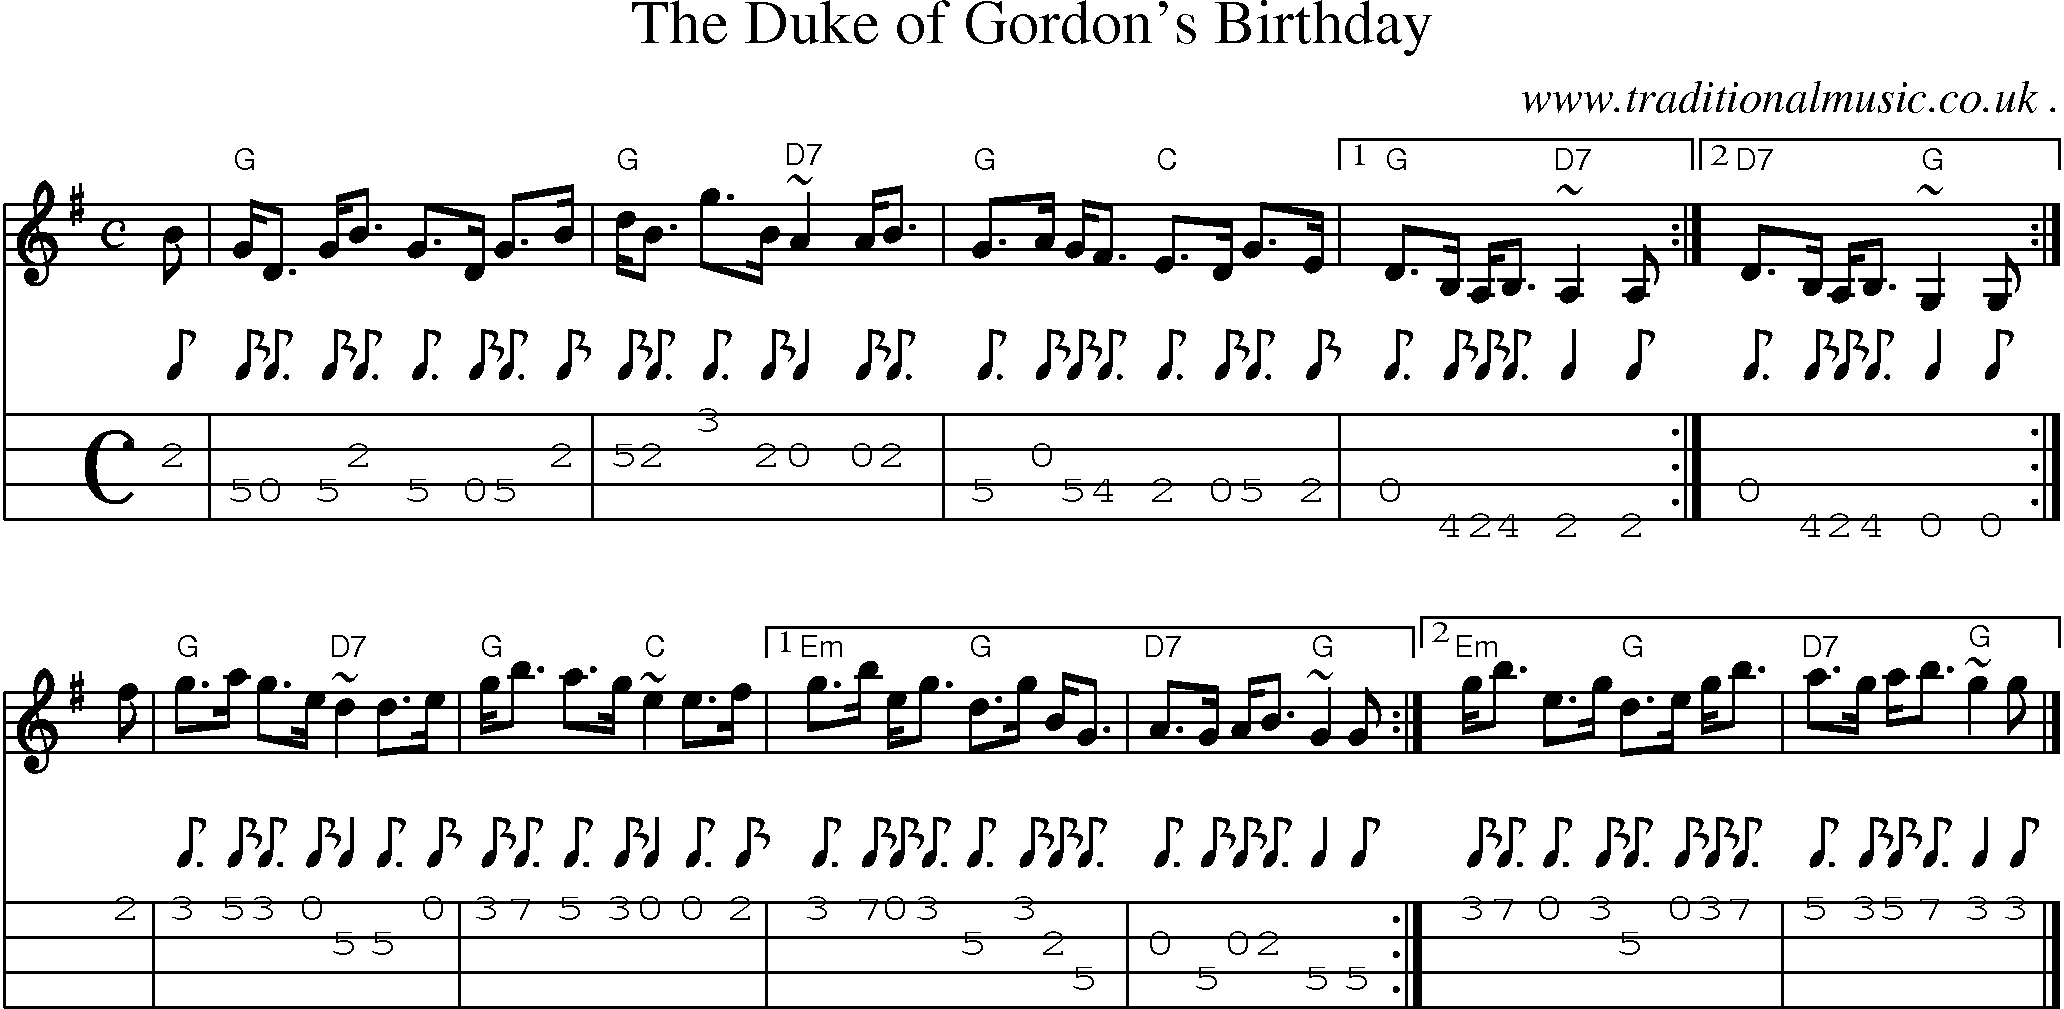 Sheet-music  score, Chords and Mandolin Tabs for The Duke Of Gordons Birthday